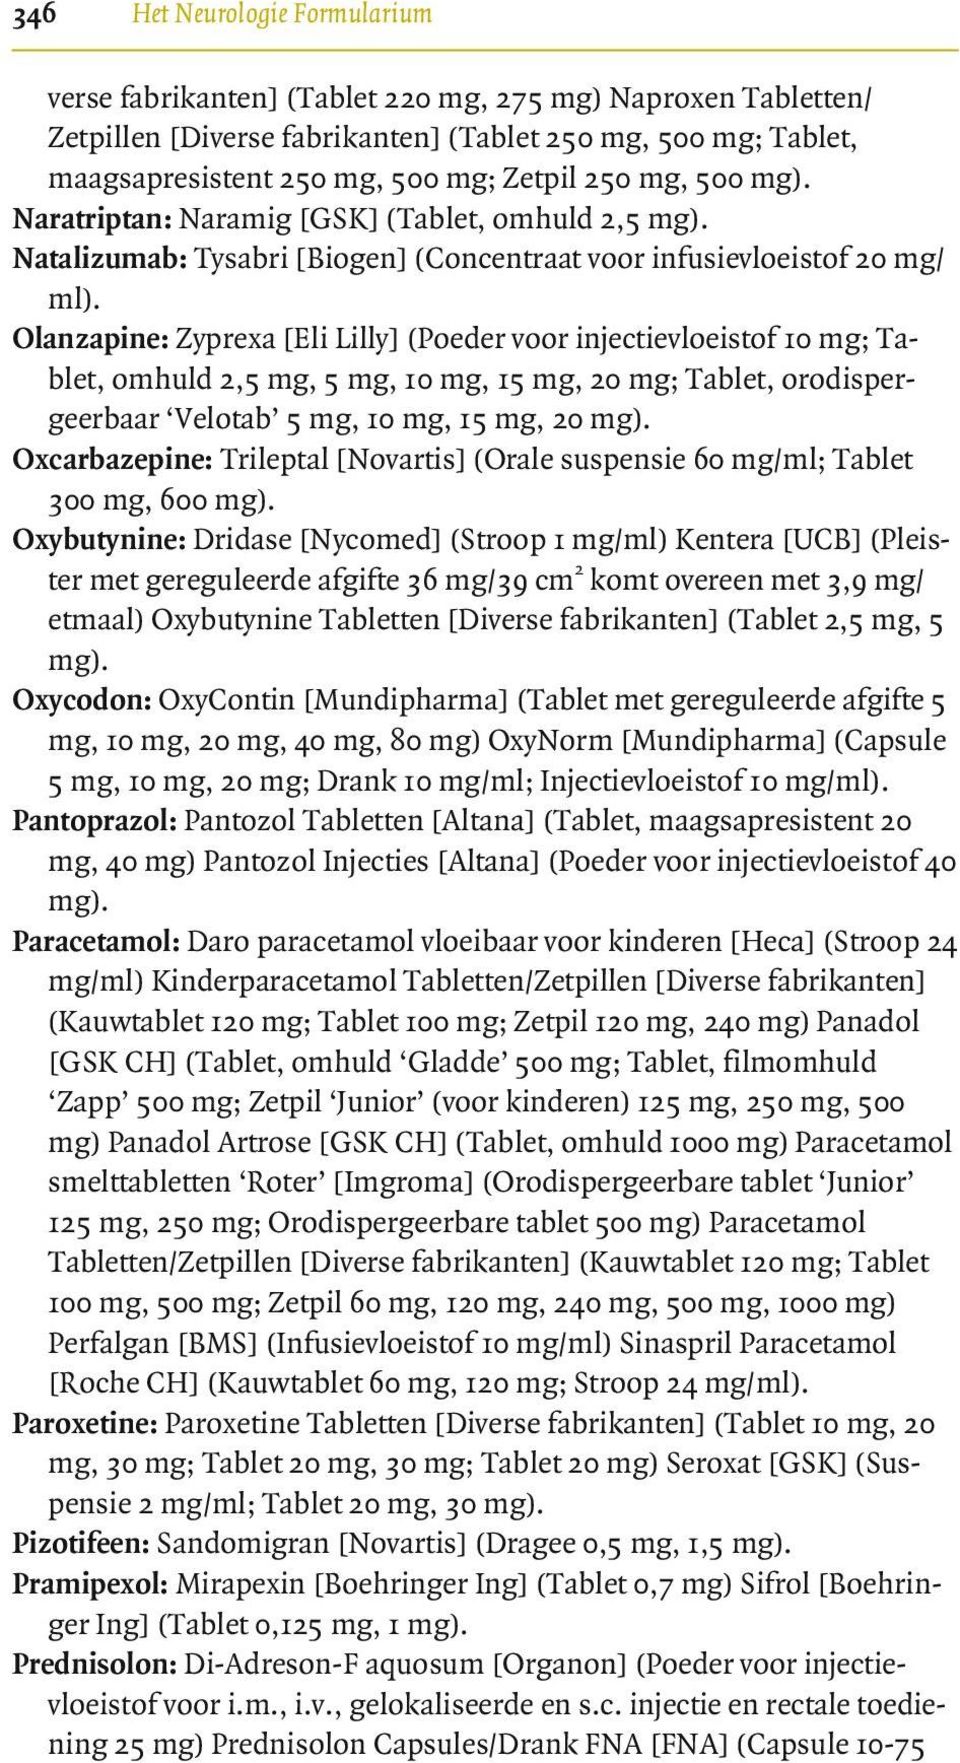 Olanzapine: Zyprexa [Eli Lilly] (Poeder voor injectievloeistof 10 mg; Tablet, omhuld 2,5 mg, 5 mg, 10 mg, 15 mg, 20 mg; Tablet, orodispergeerbaar Velotab 5 mg, 10 mg, 15 mg, 20 mg).